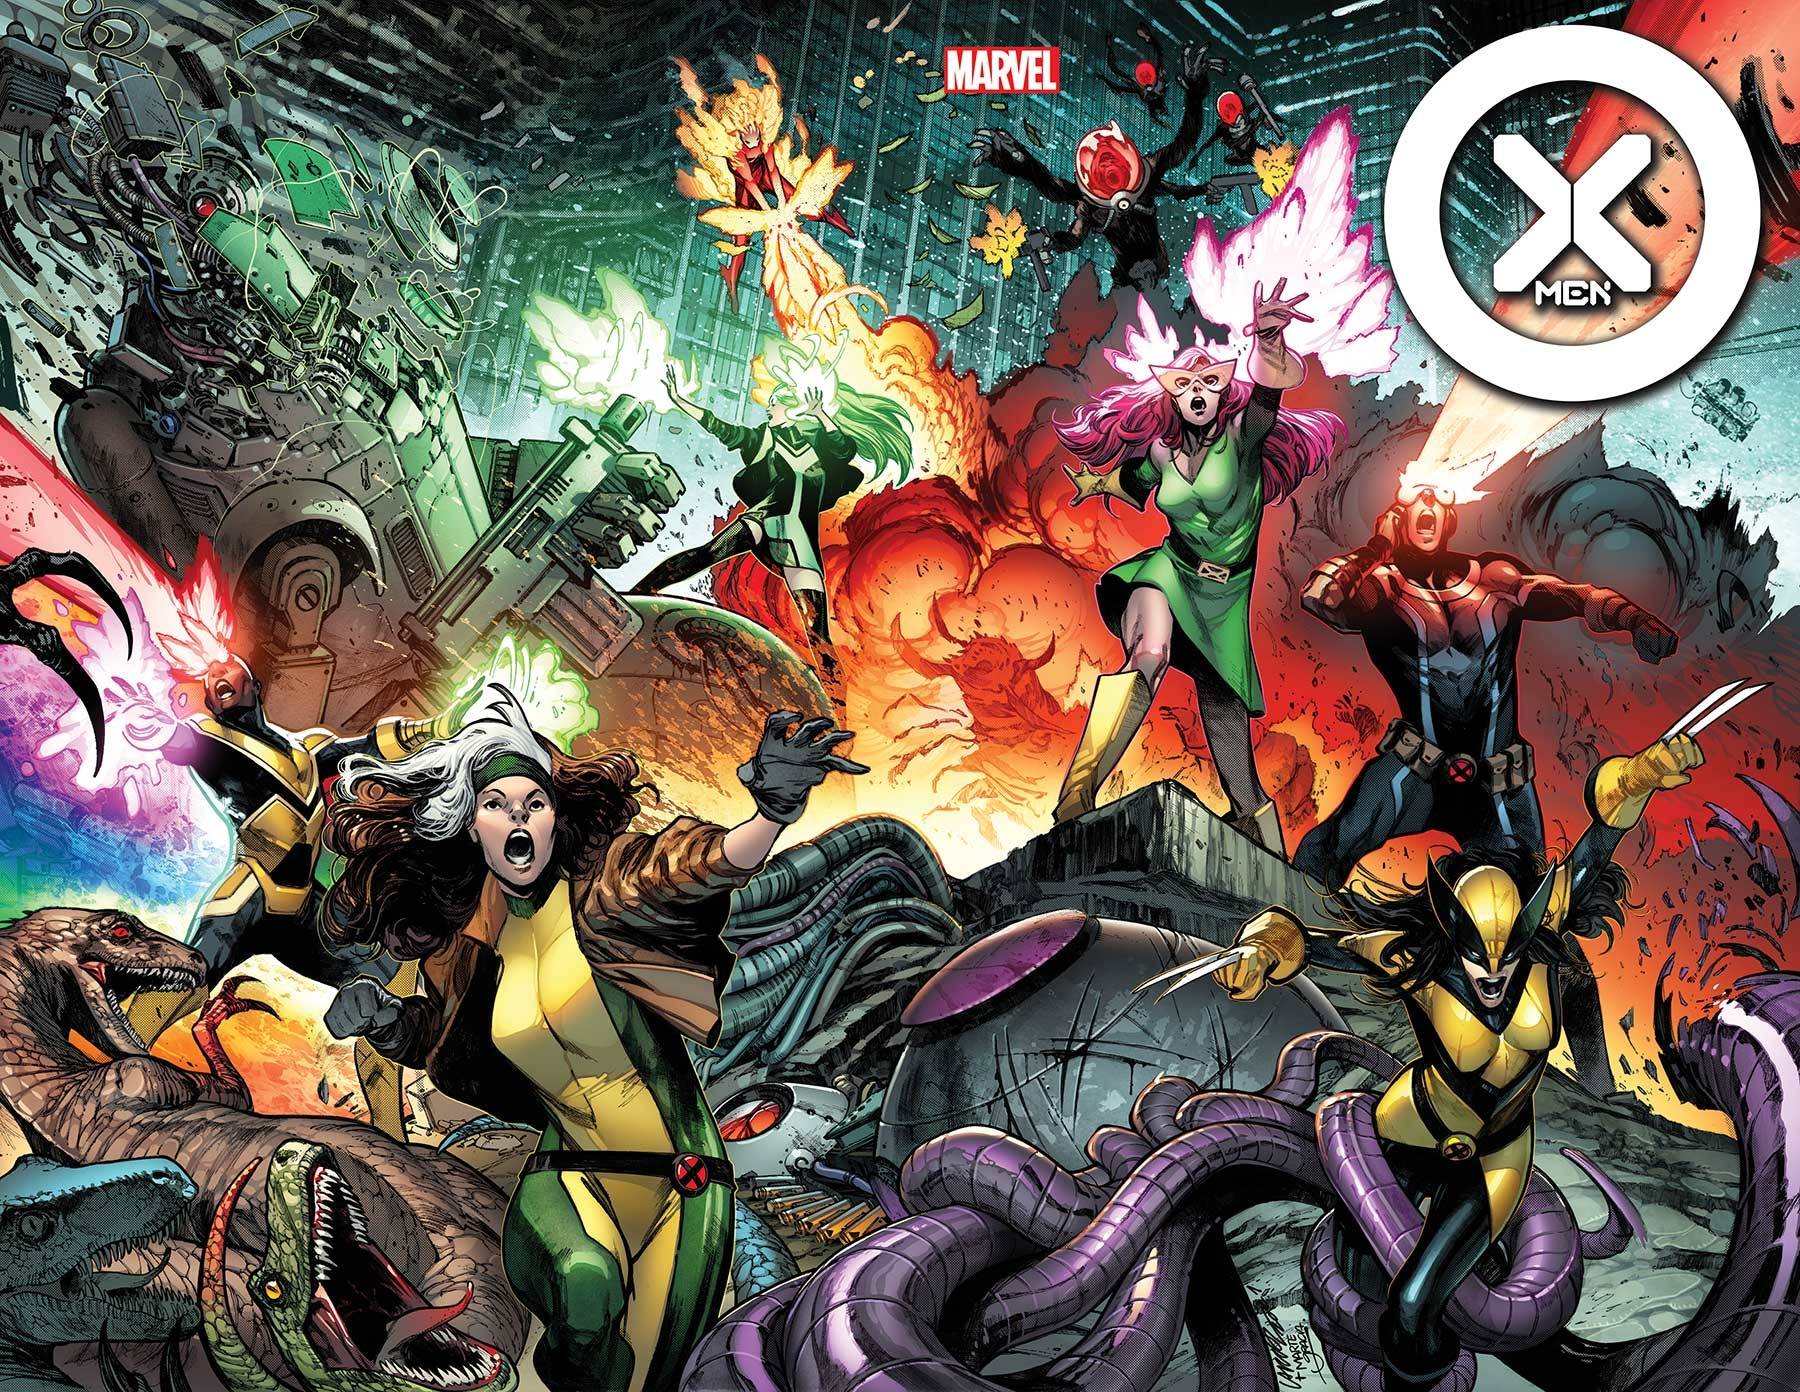 Marvel First Look: Gerry Duggan and Pepe Larraz's 'X-Men' #1